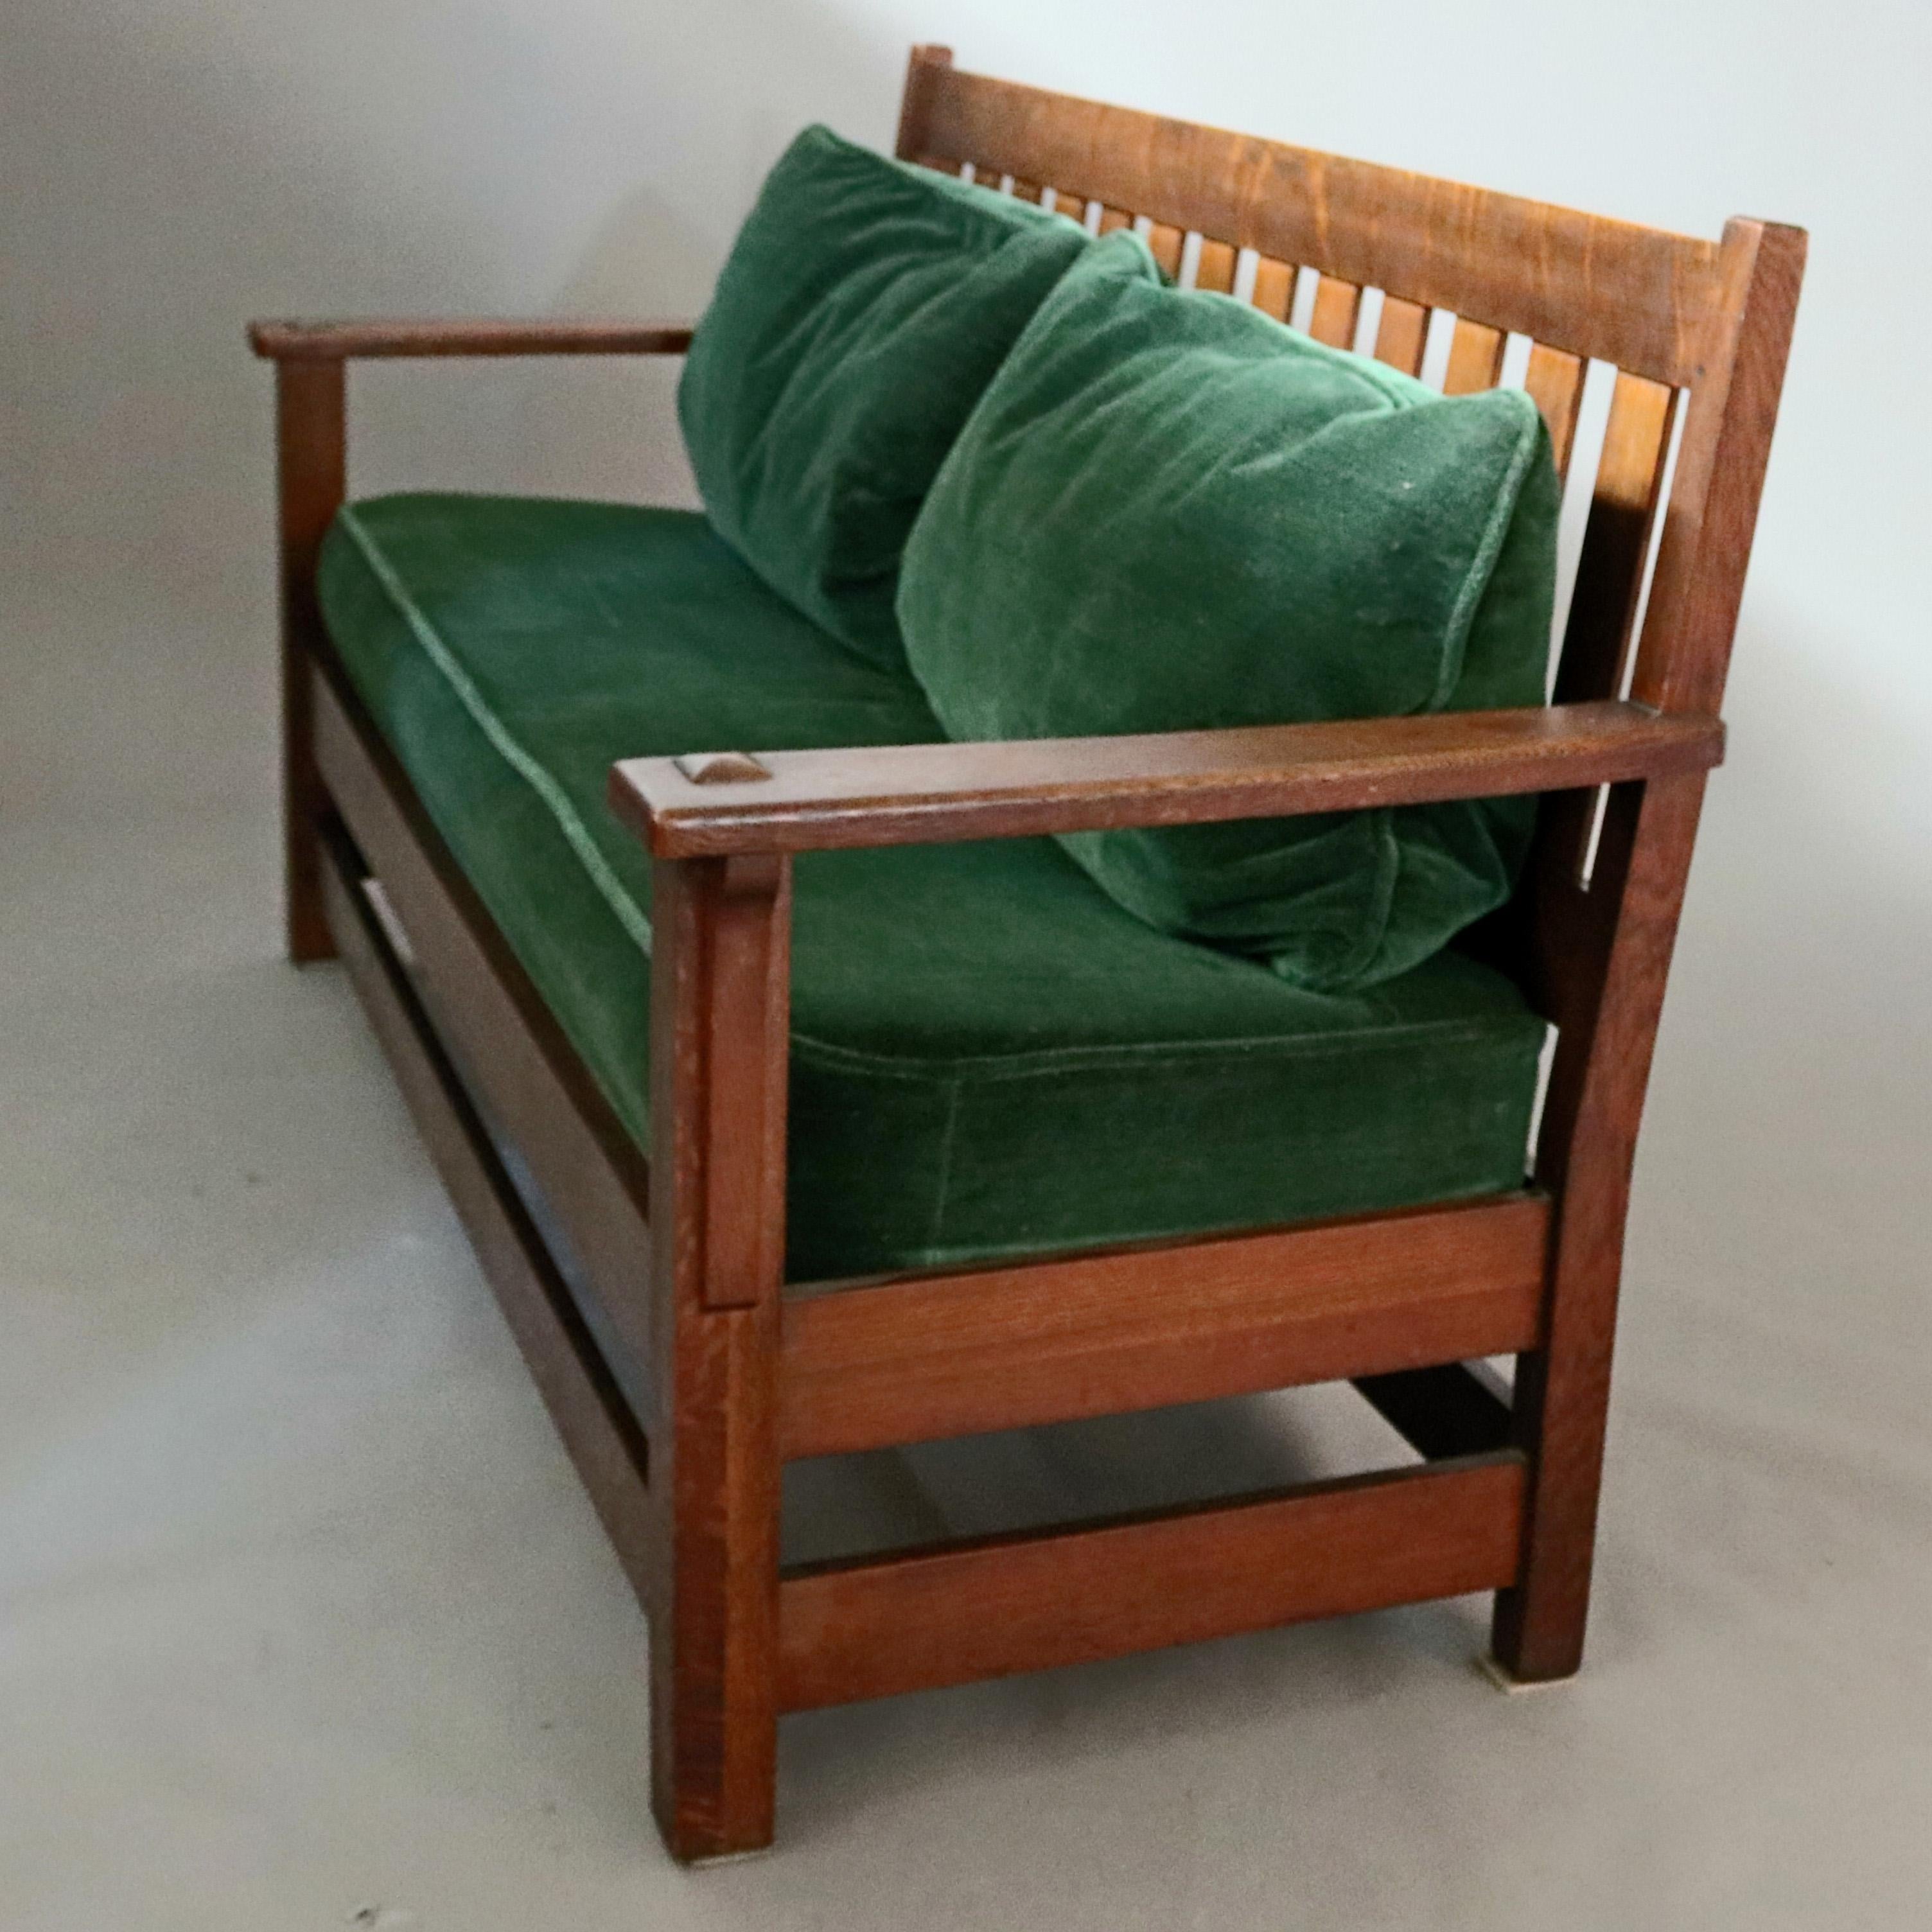 Upholstery Antique Arts & Crafts Mission Oak Slat Back Settee by Limbert, circa 1910